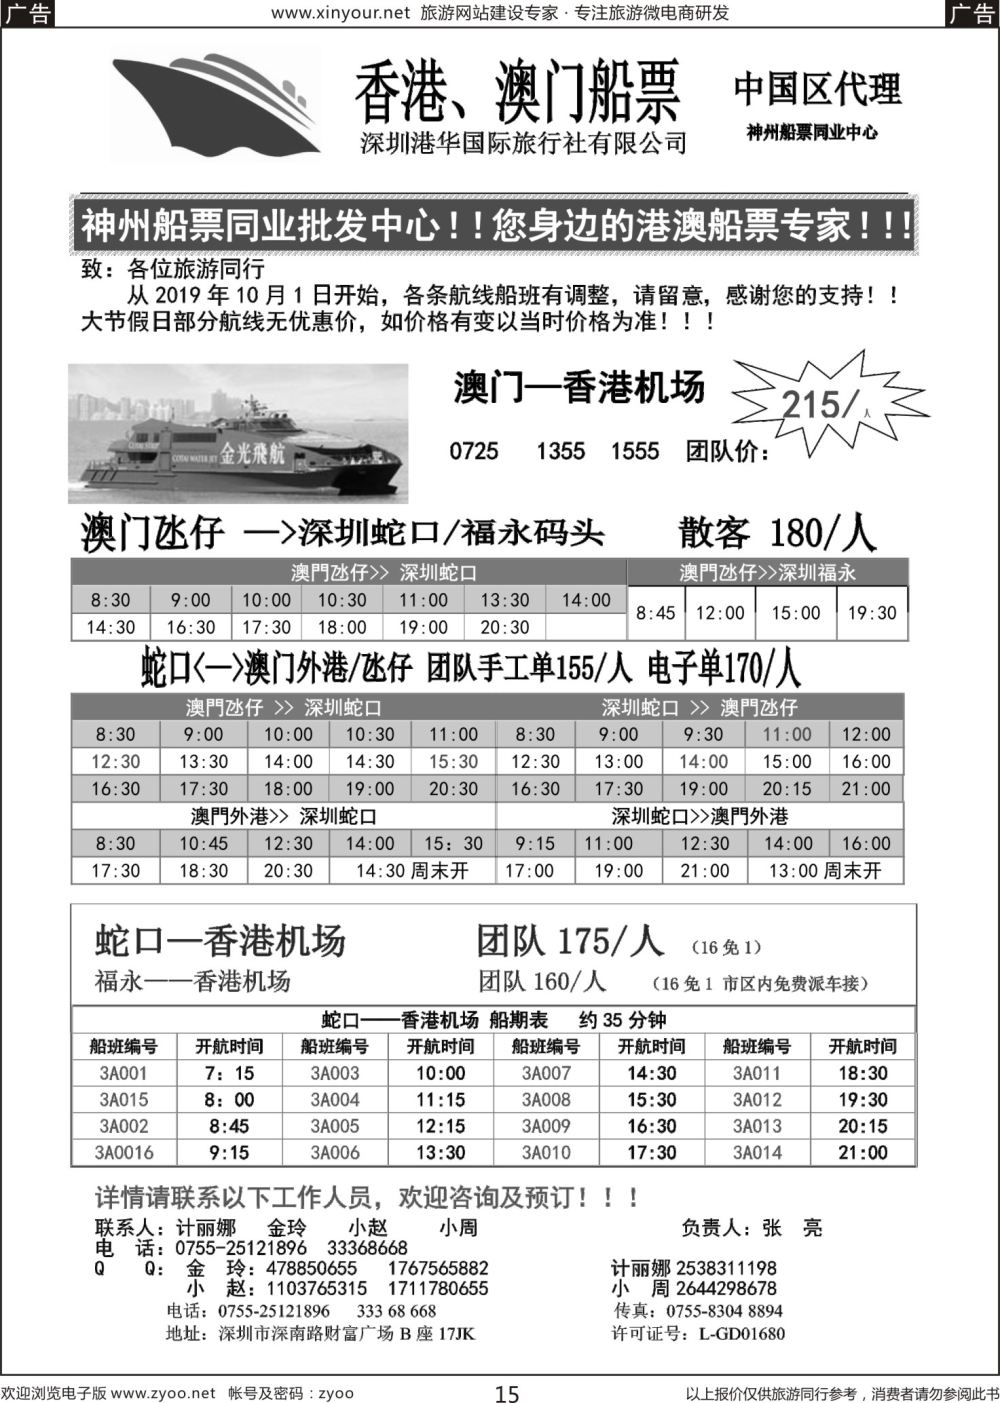 b15 香港、澳门船票—港华国旅船票同业批发中心